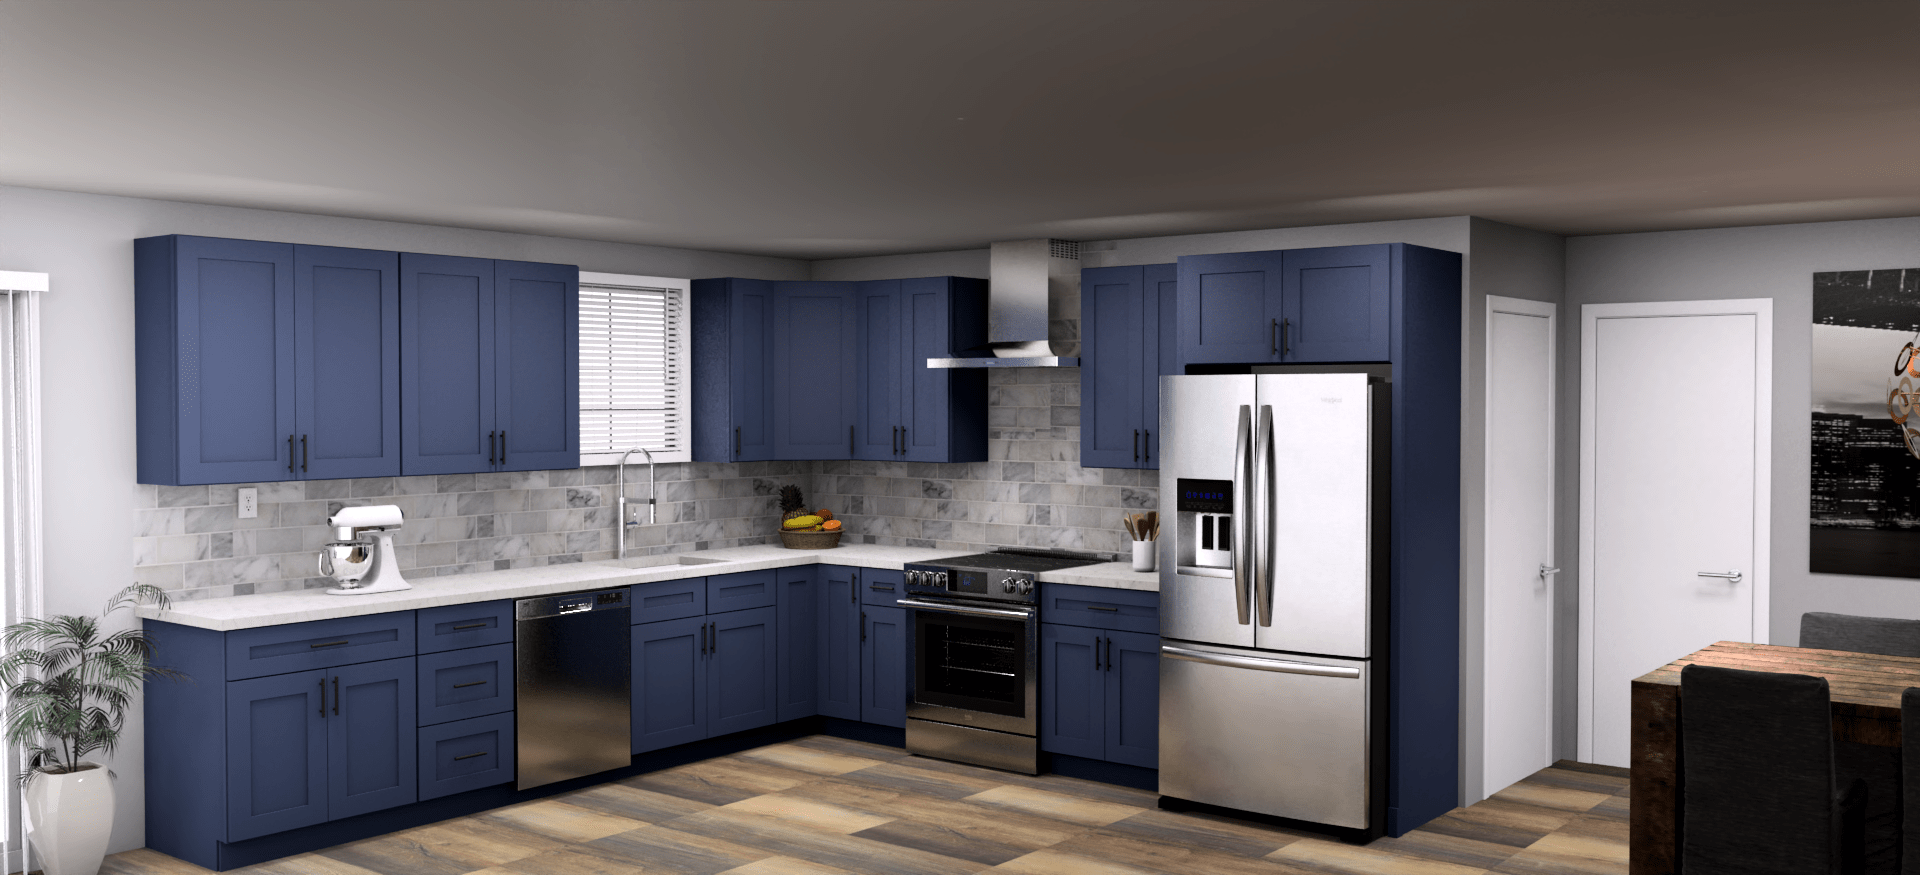 LessCare Danbury Blue 12 x 12 L Shaped Kitchen Main Layout Photo